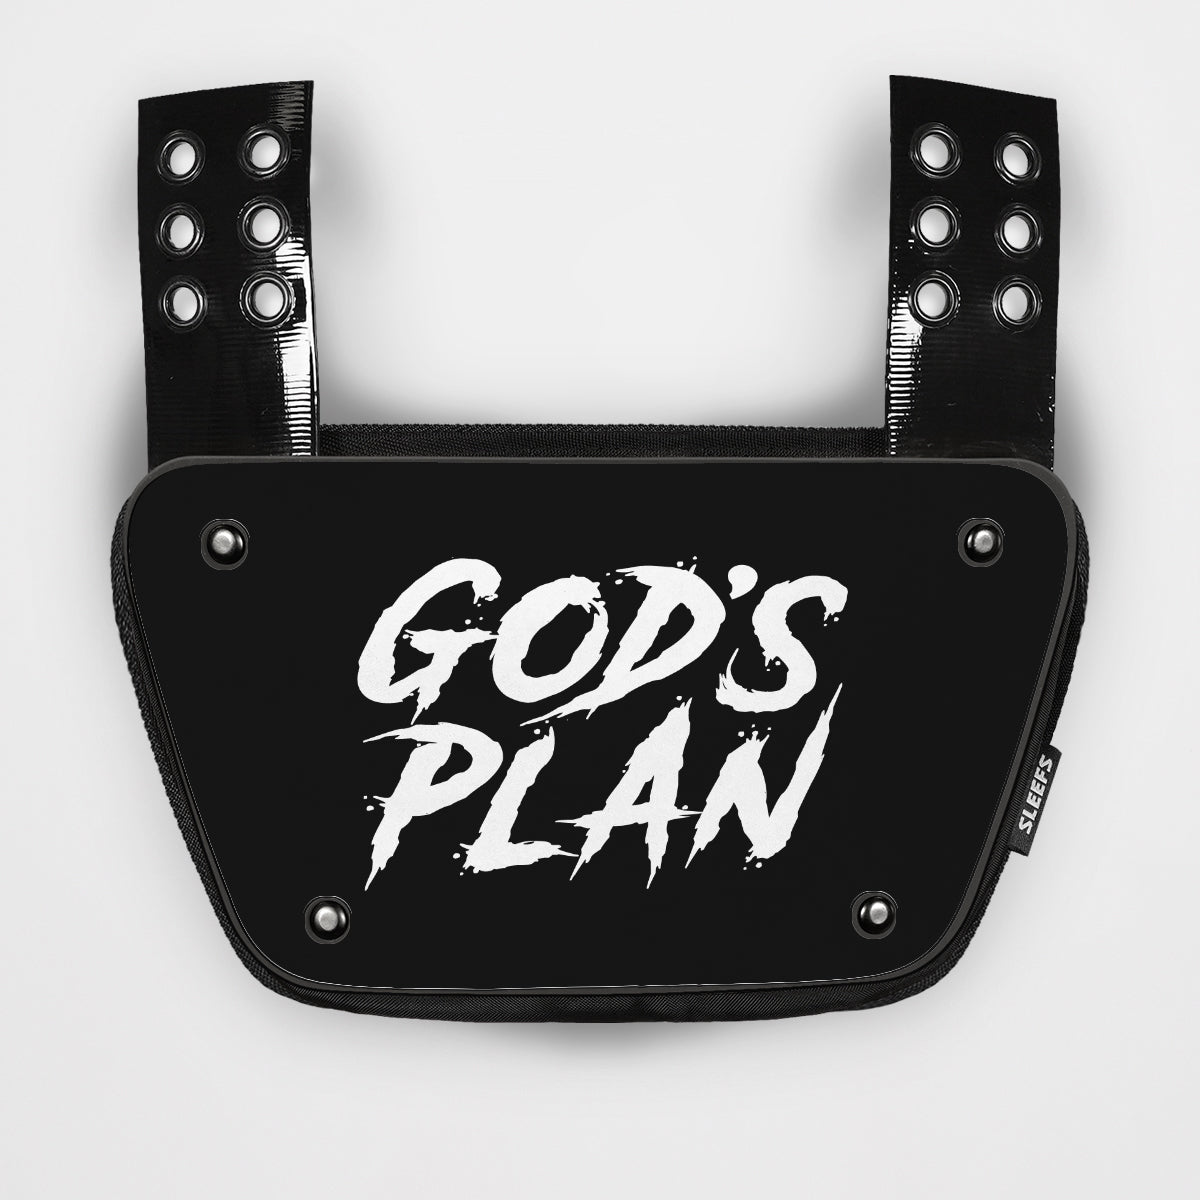 God's Plan Black Sticker for Back Plate